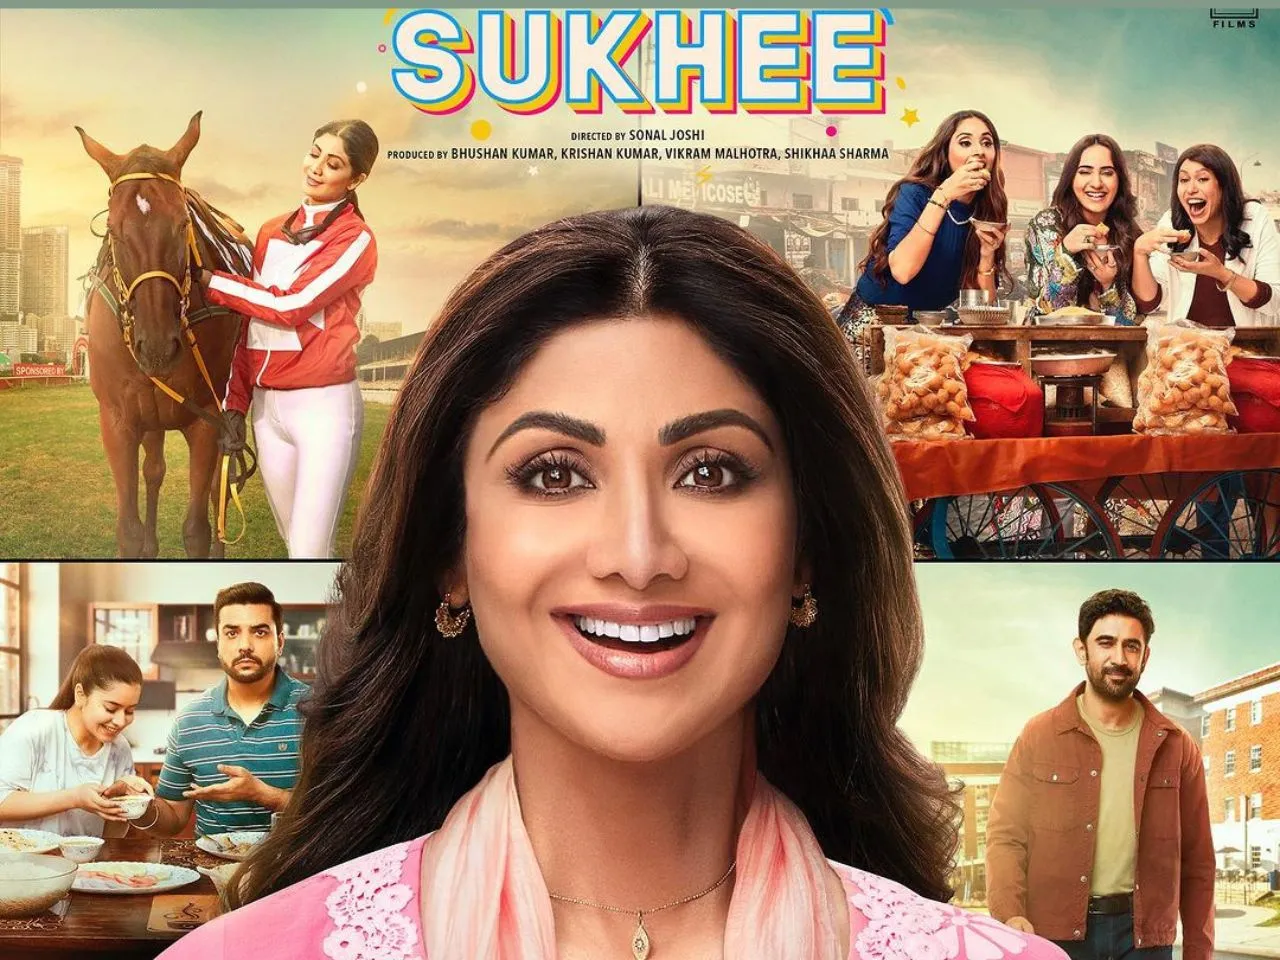 Bedhadak, Besharam, Beparwah: Sukhee trailer promises a fun and empowering watch for women